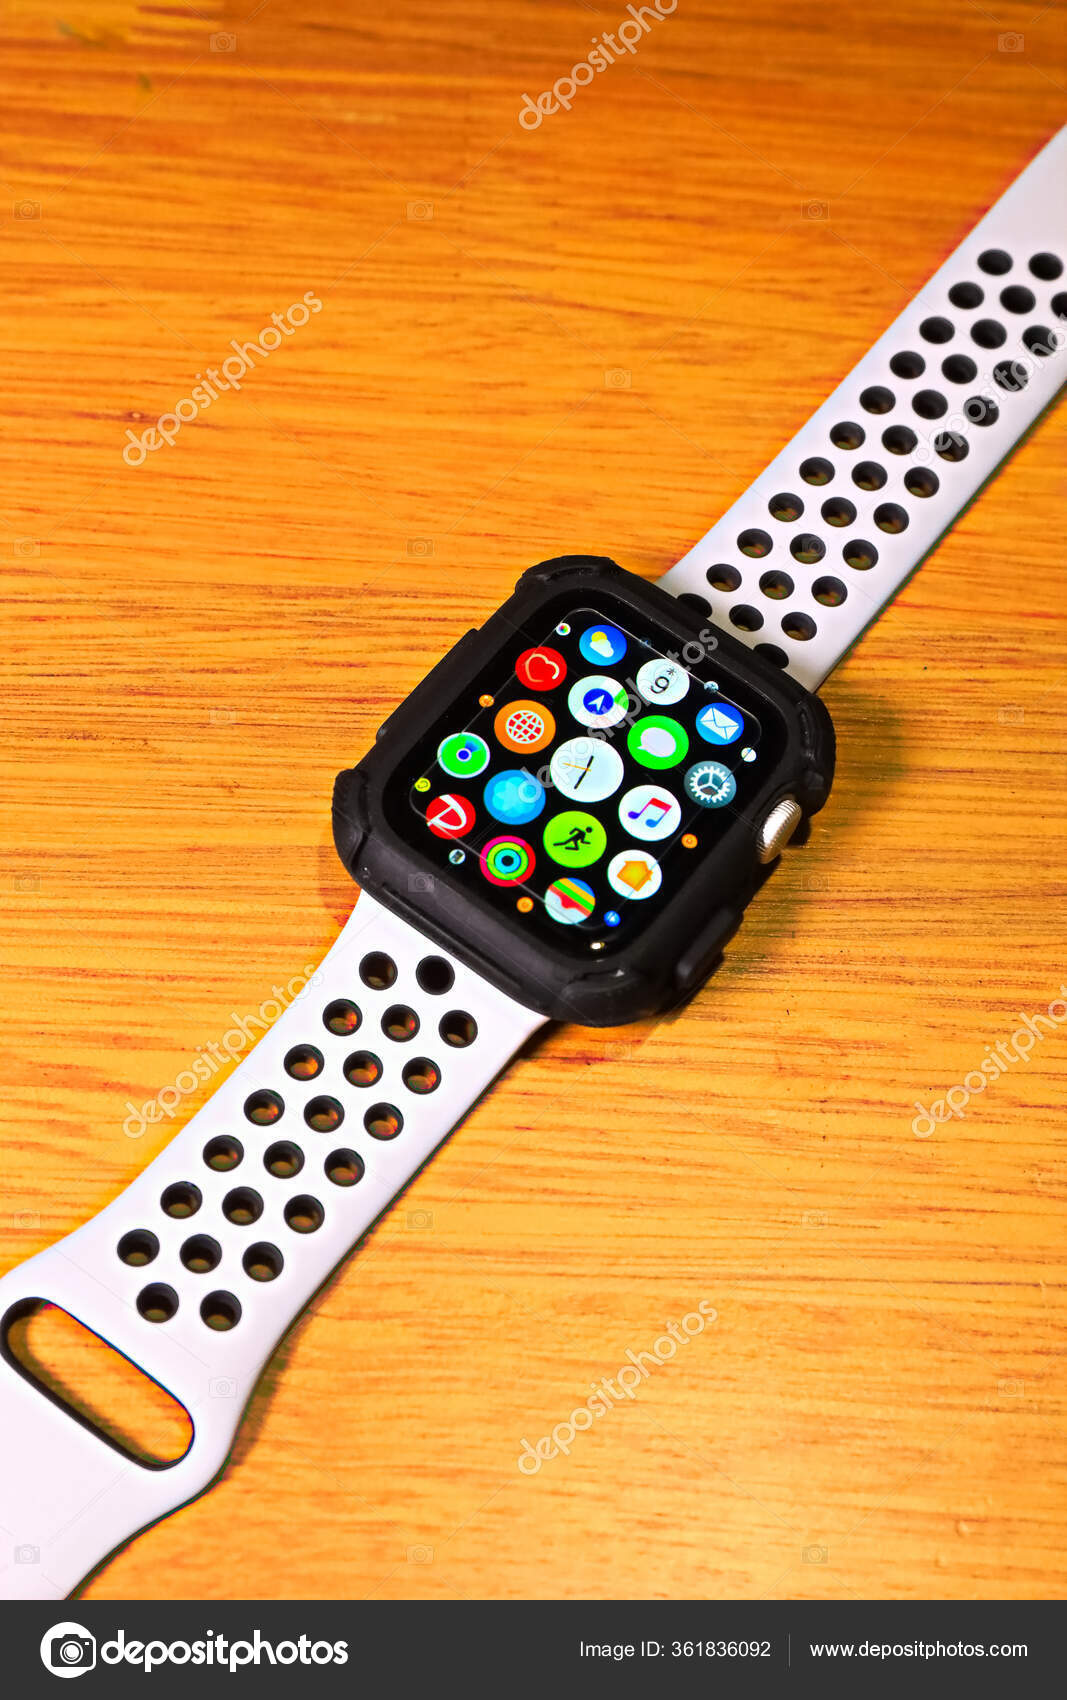 apple watch 5 nike edition 44mm